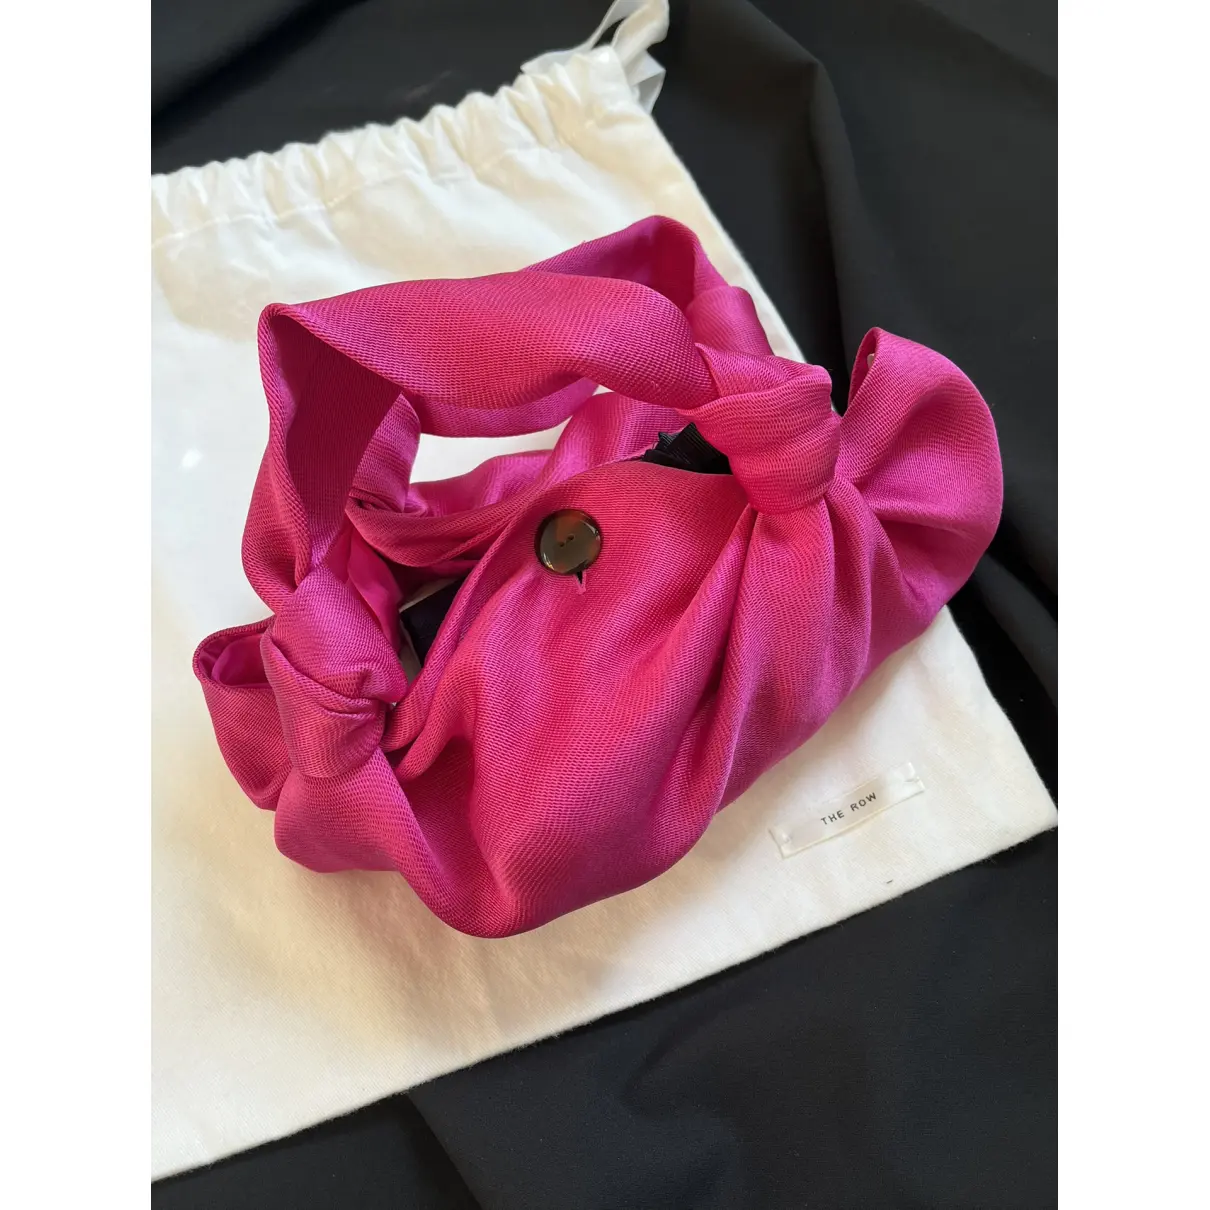 Buy The Row Ascot silk handbag online